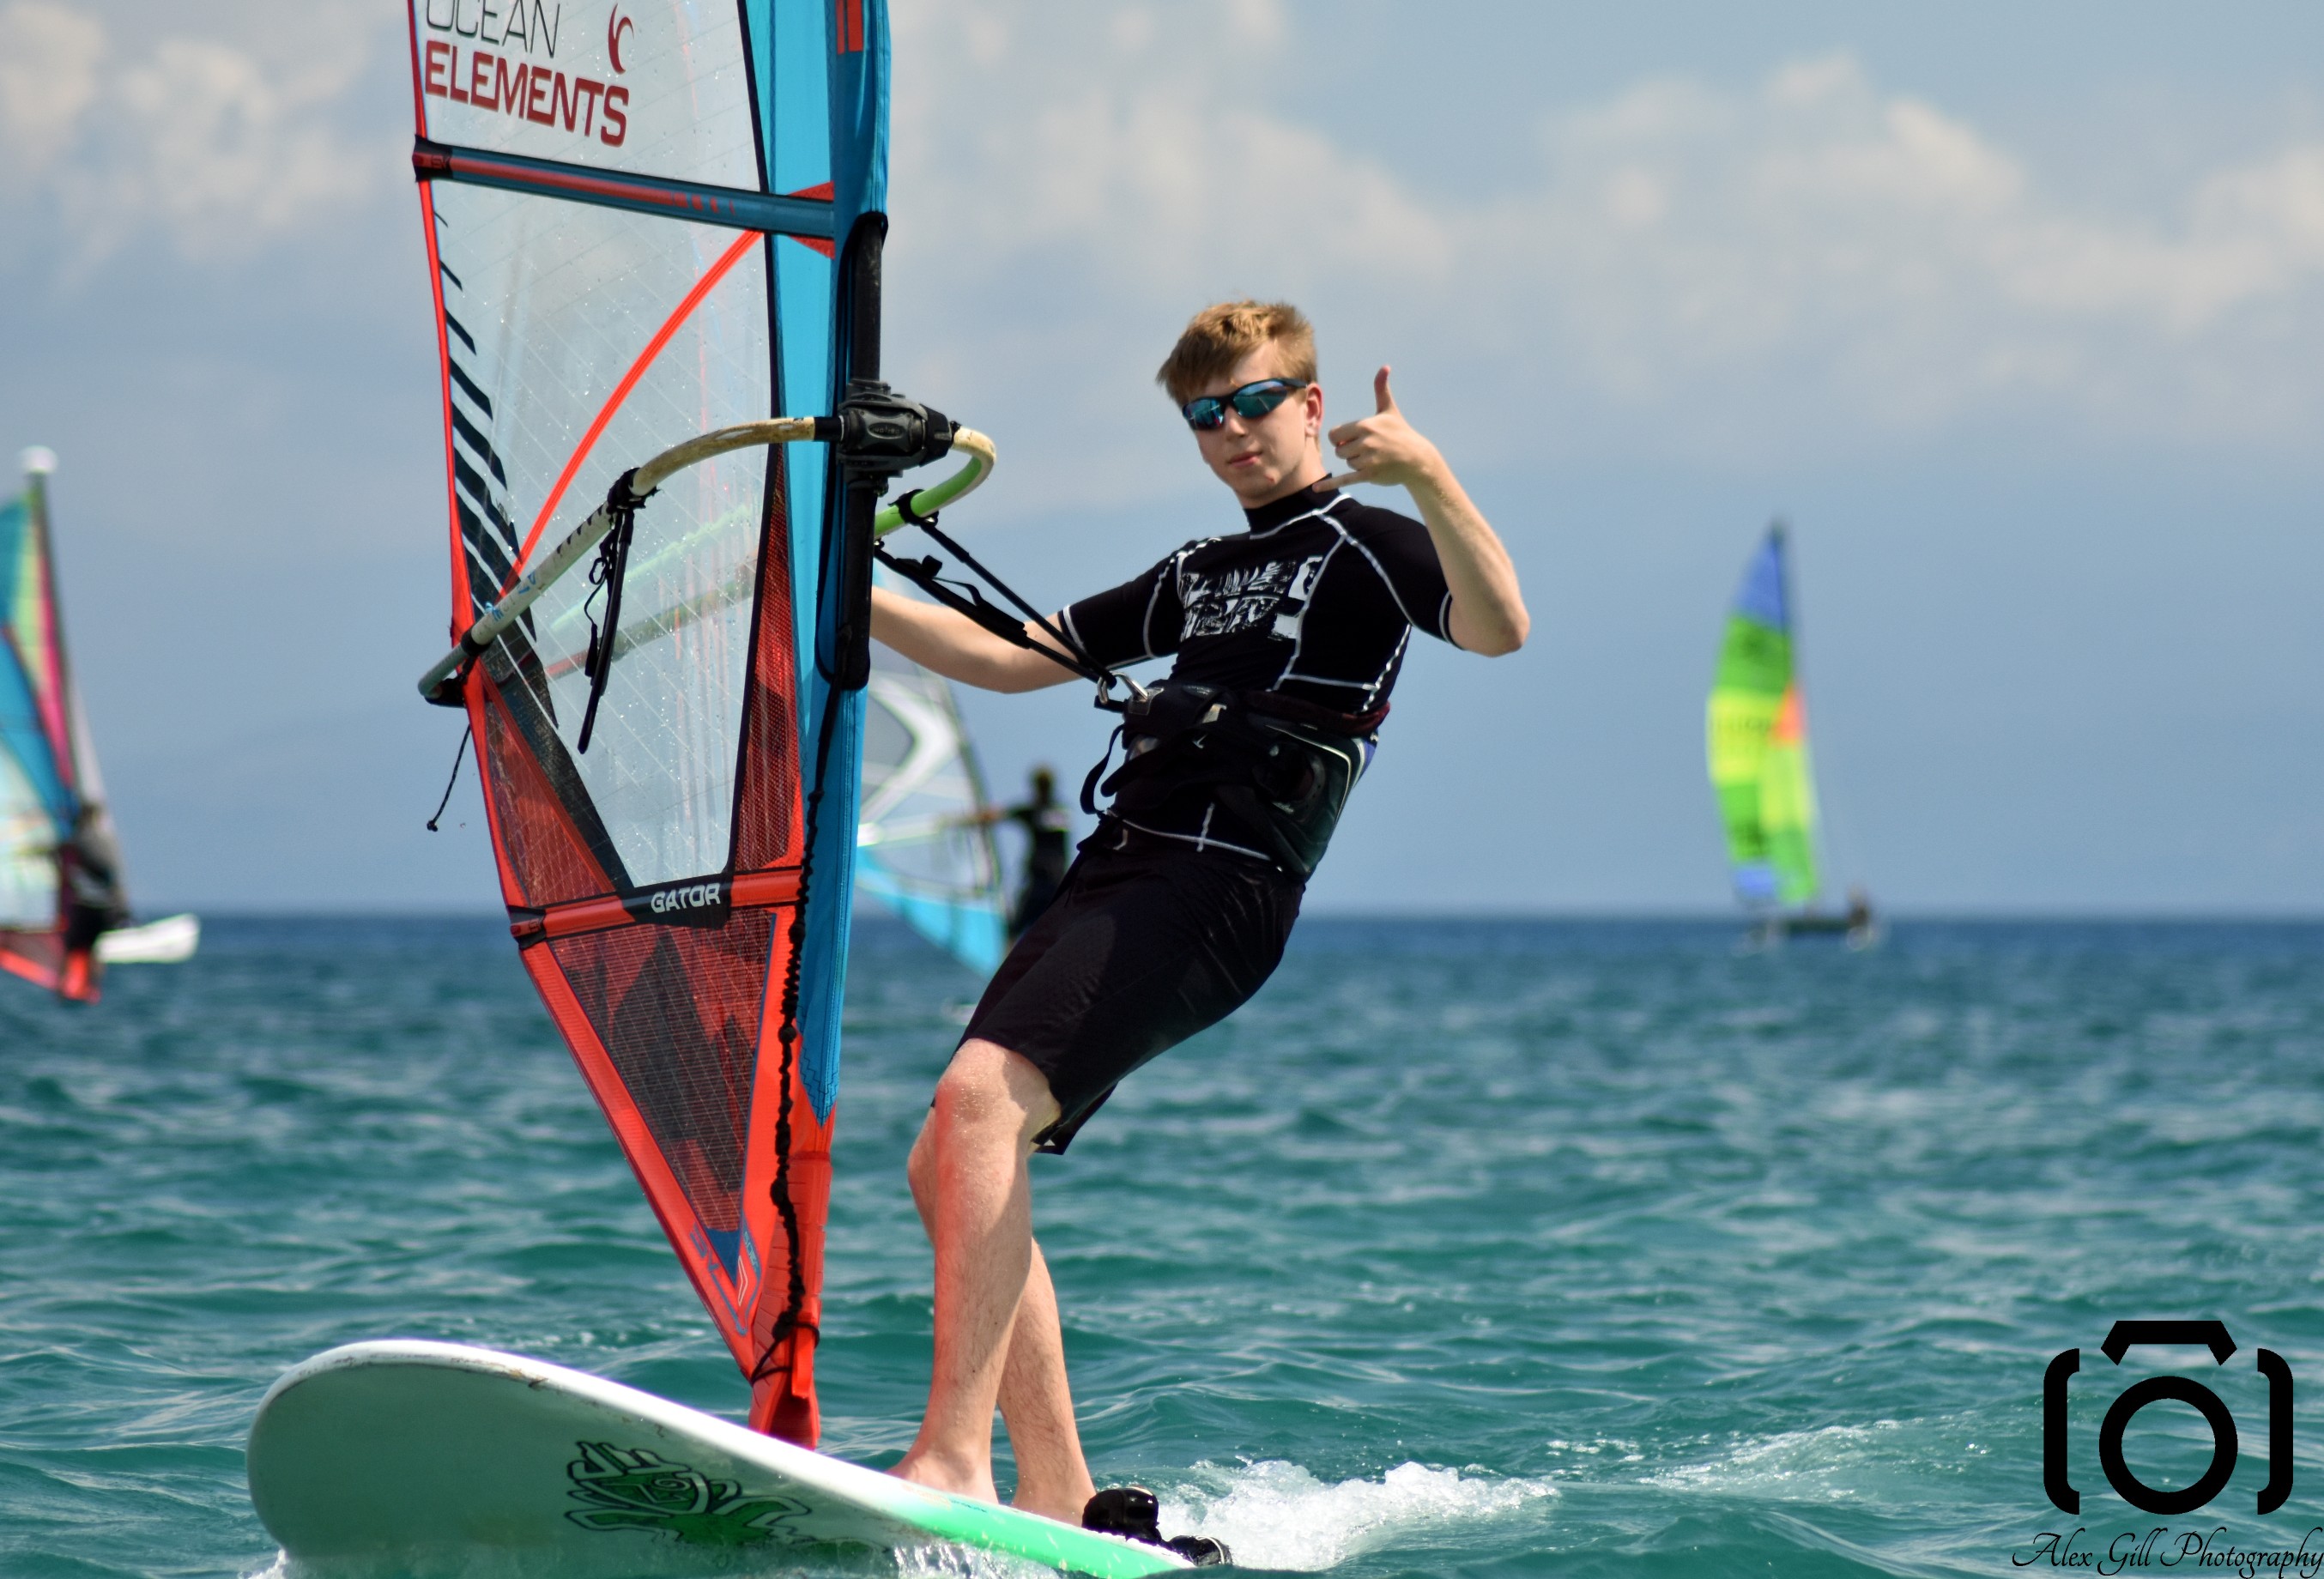 Jan windsurfing